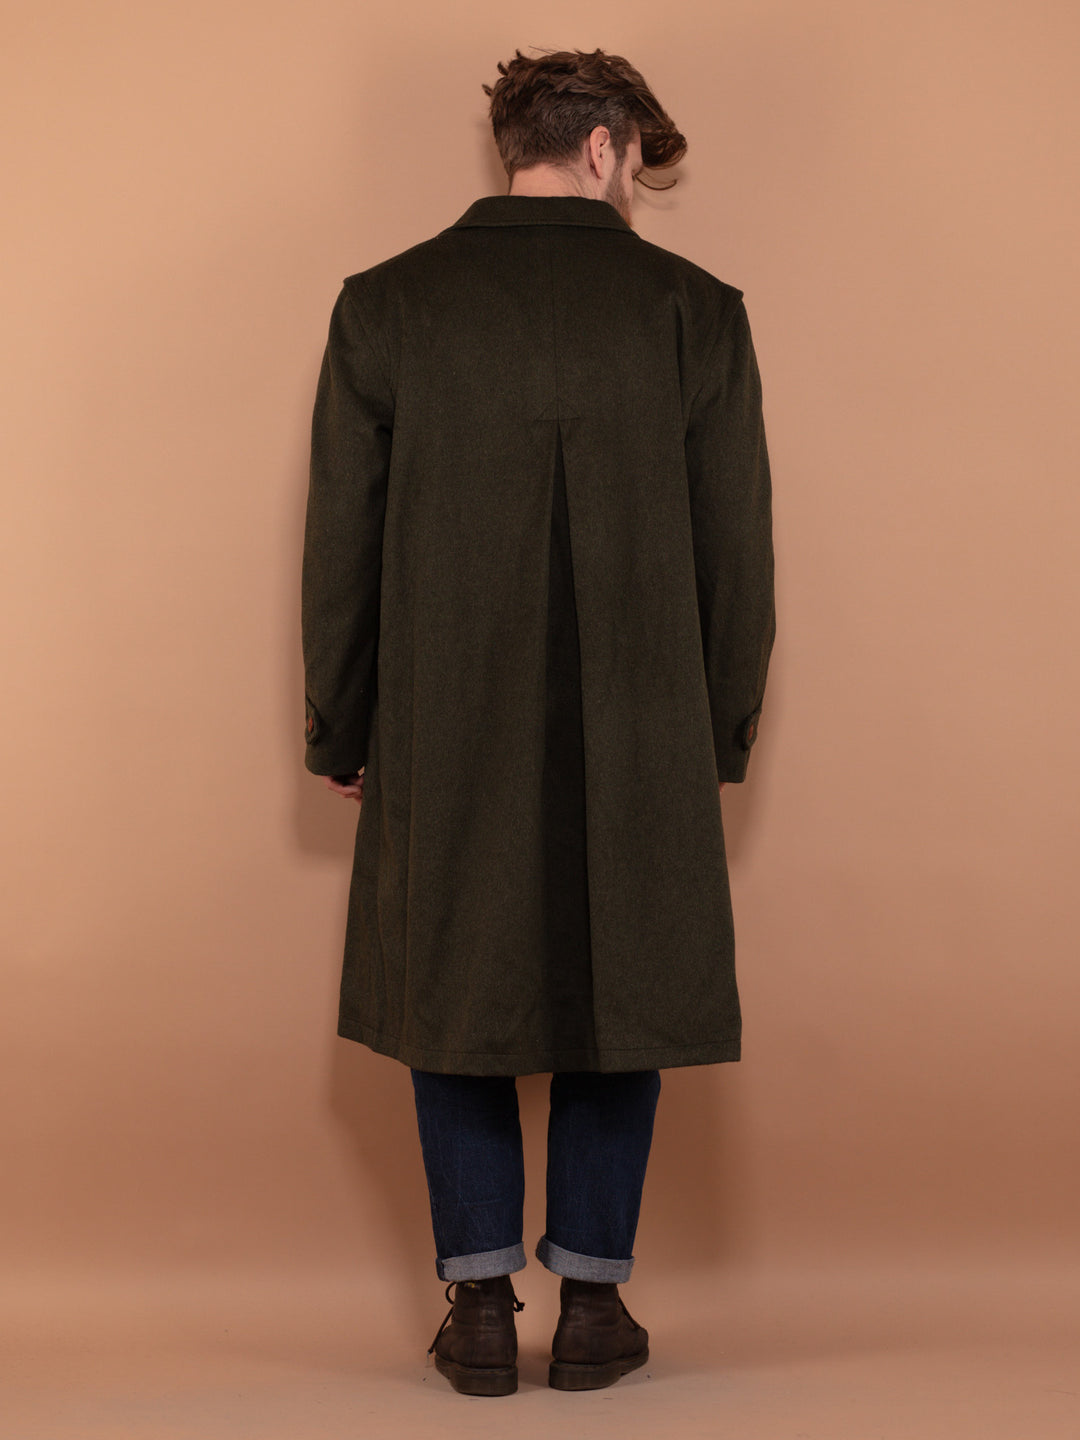 Loden Wool Coat 70s, Loden Coat In Green Size XL, Woolen Coat, Winter Wool Coat, Preppy Formal Elegant Wool Overcoat, Vintage Men Clothing